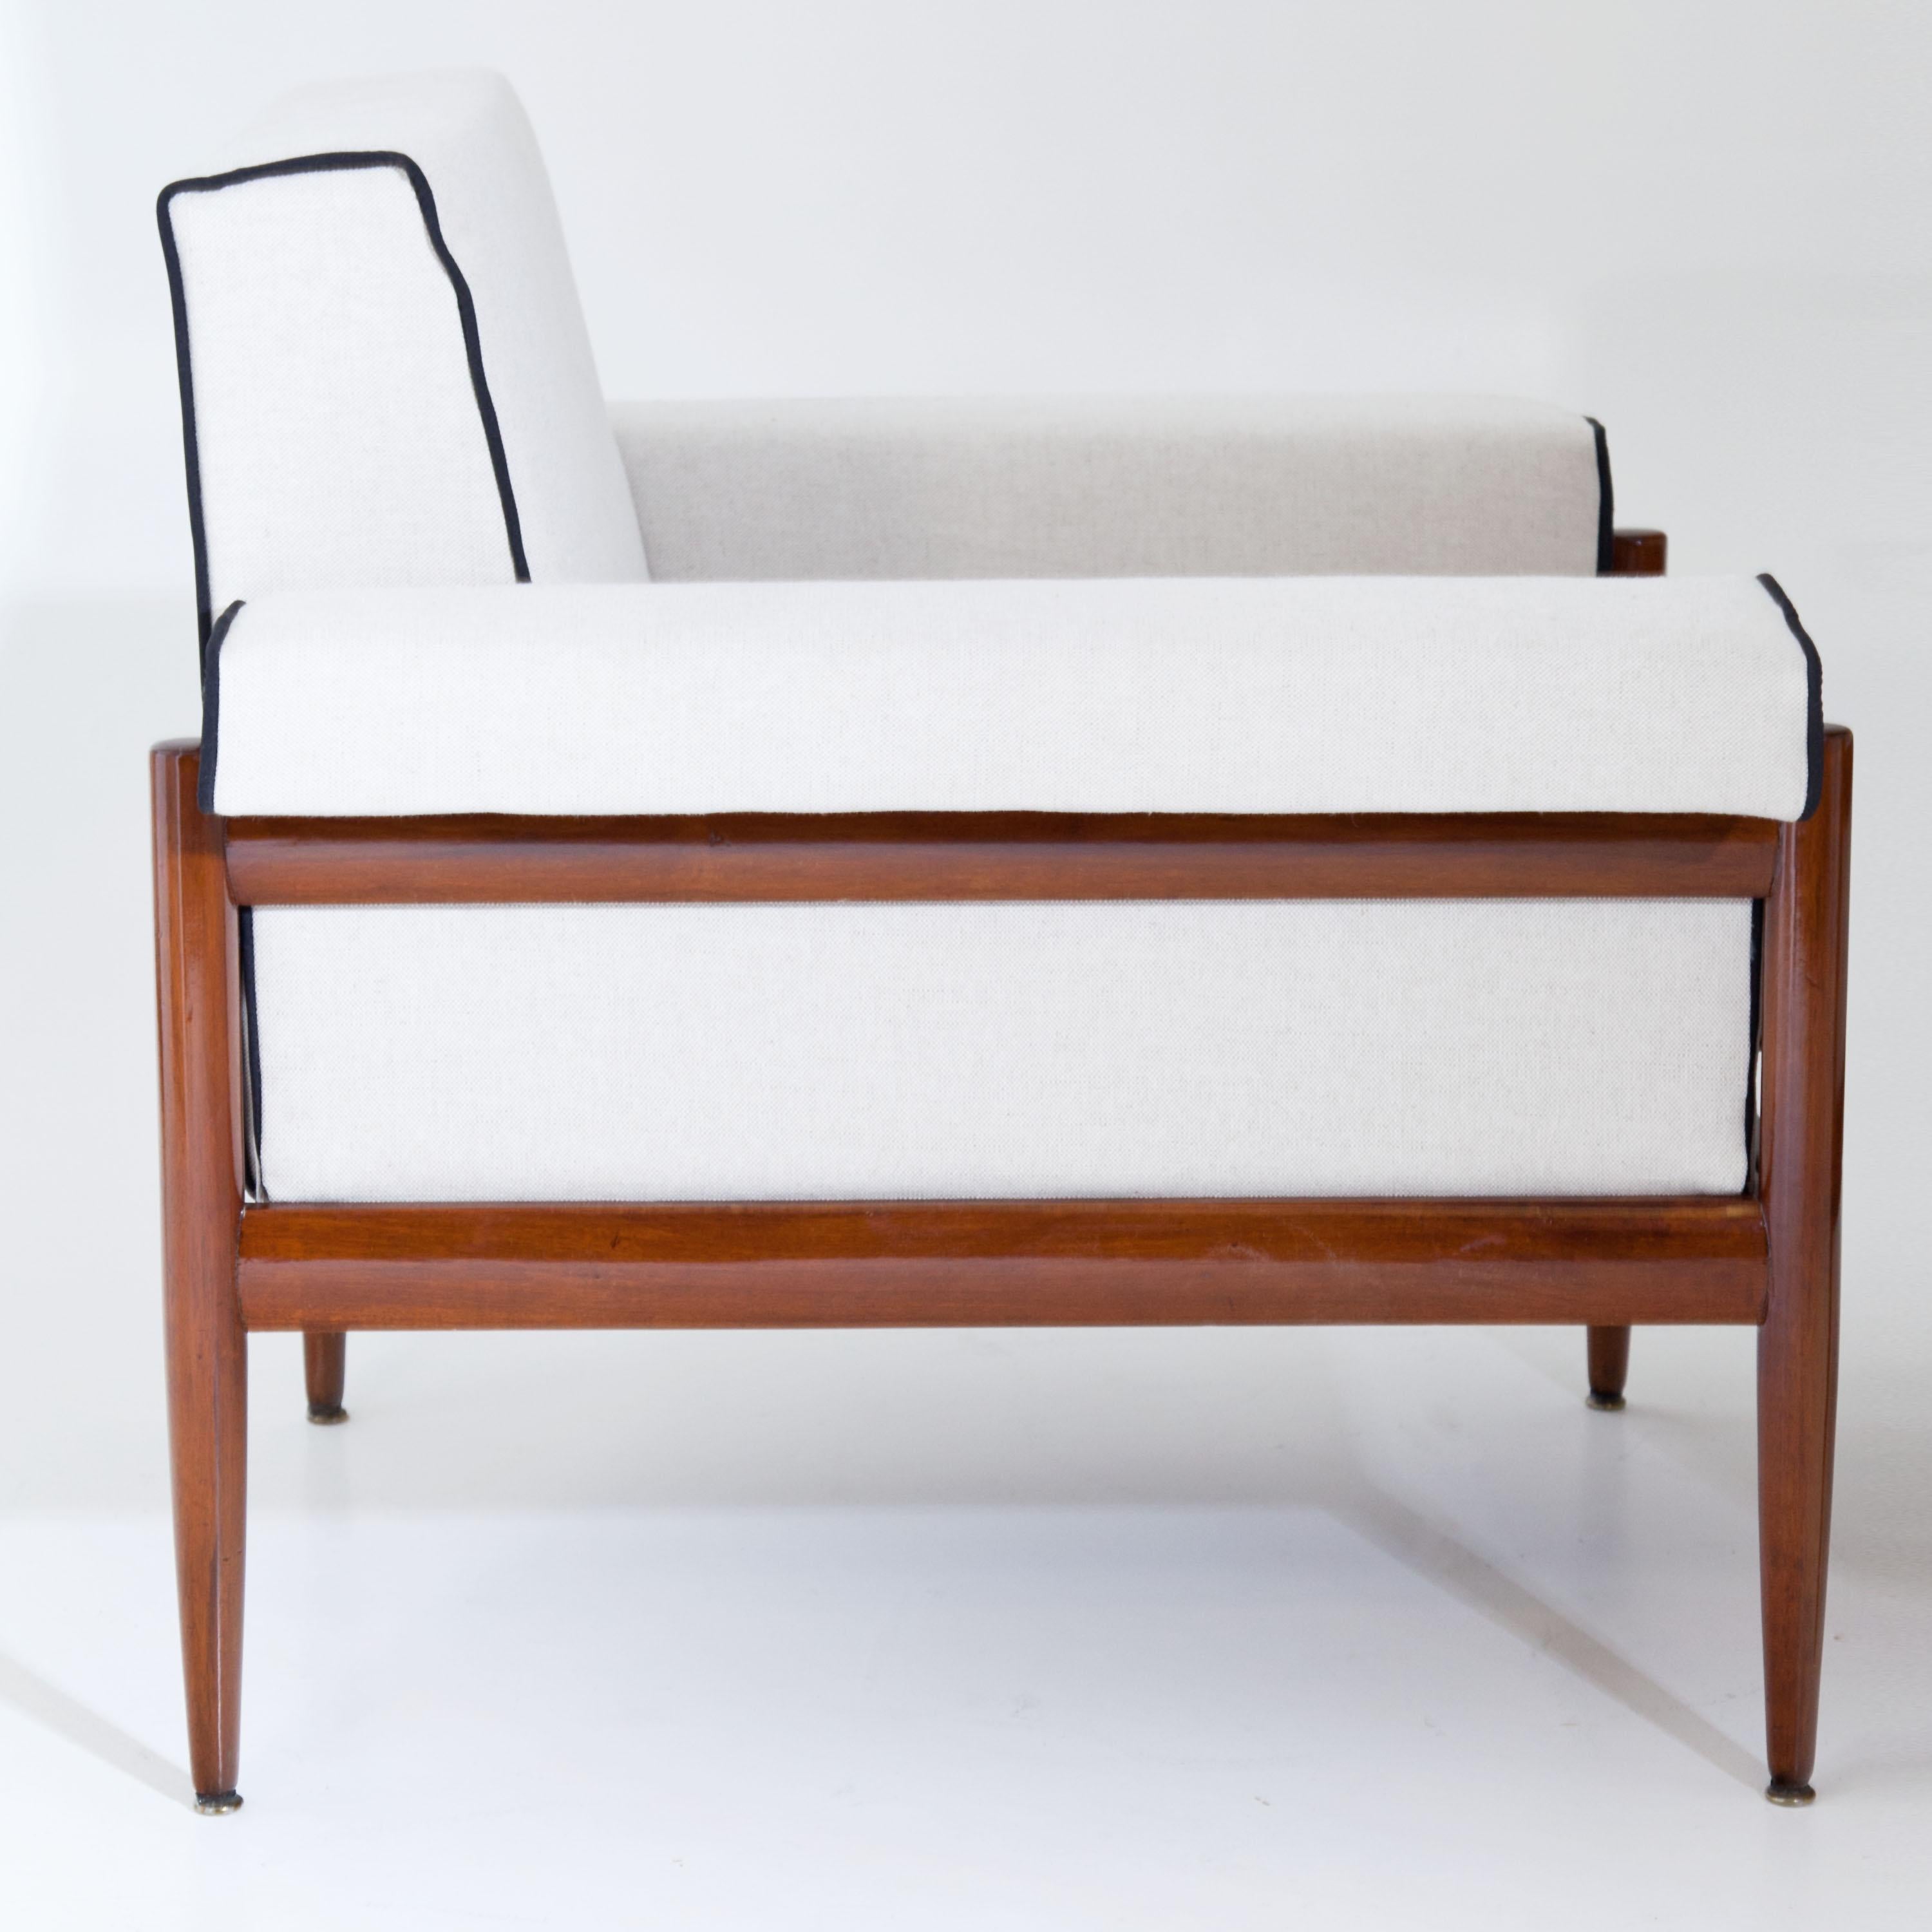 Pair of Italian Design Lounge Chairs, Trafilisa Isa Bergamo, Italy 1950s For Sale 1